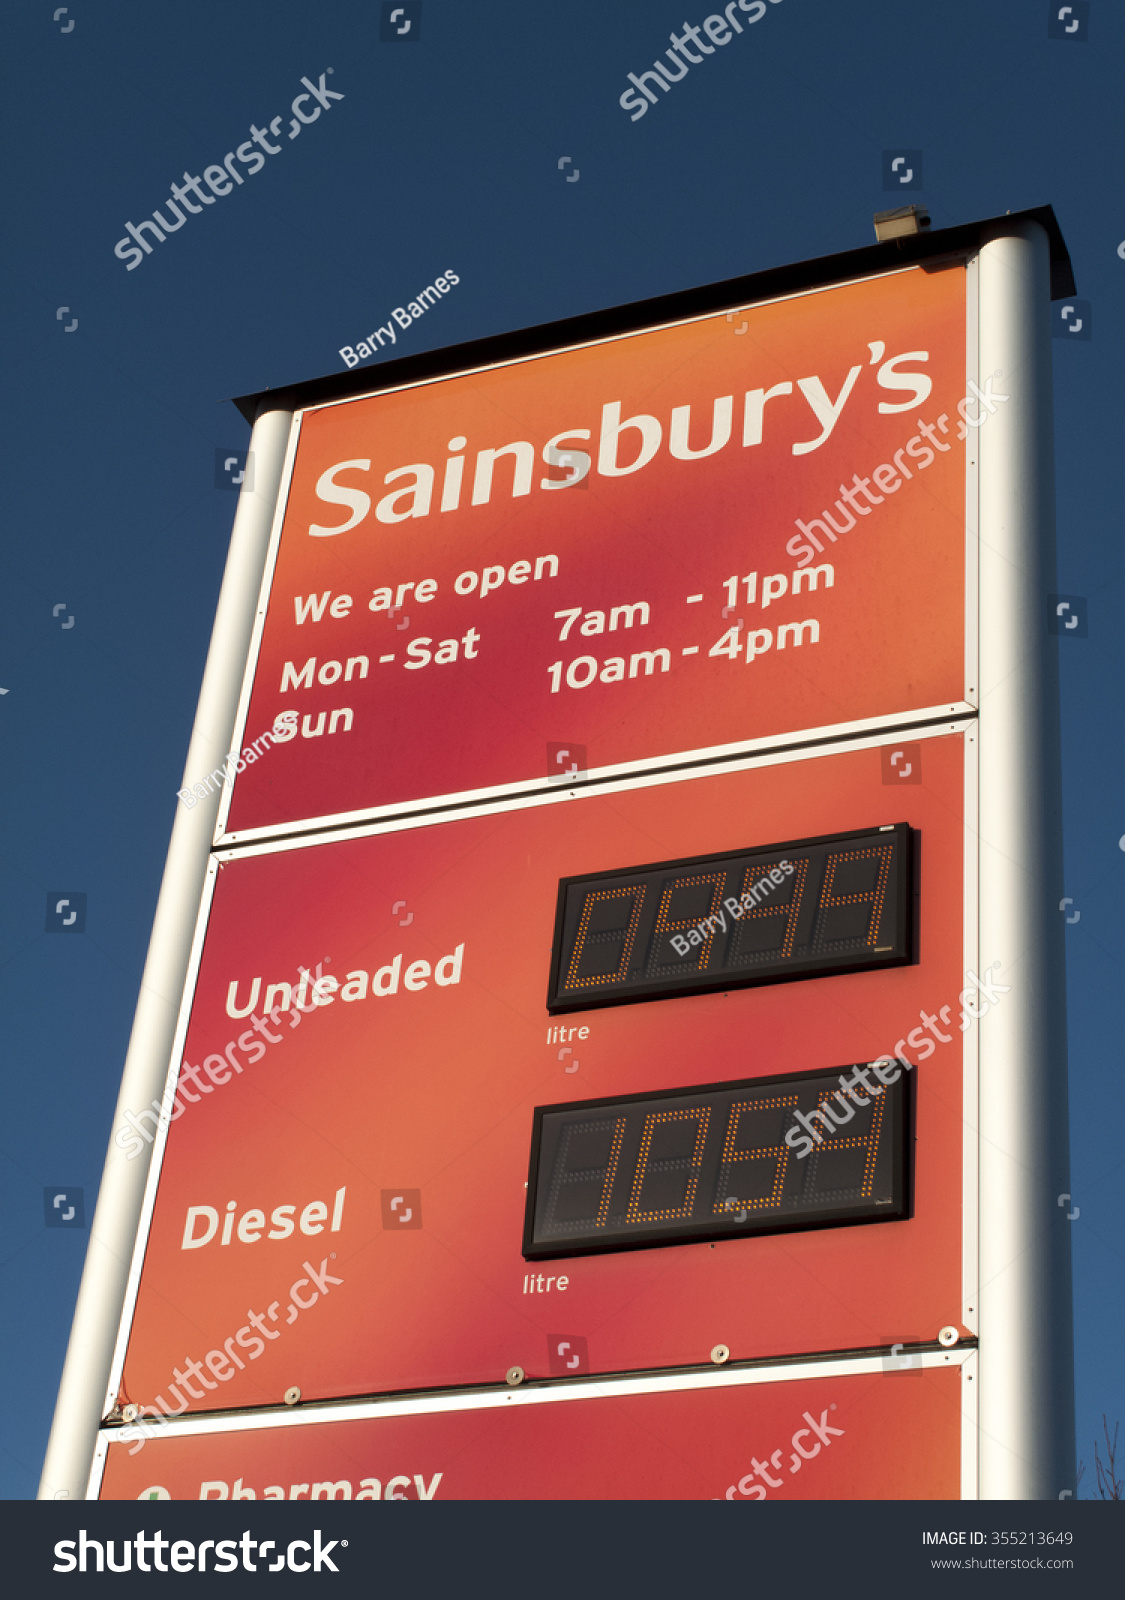 Newbury, Hectors Way, Berkshire, England - December 23, 2015: Sainsburys supermarket petrol and diesel prices sign #355213649